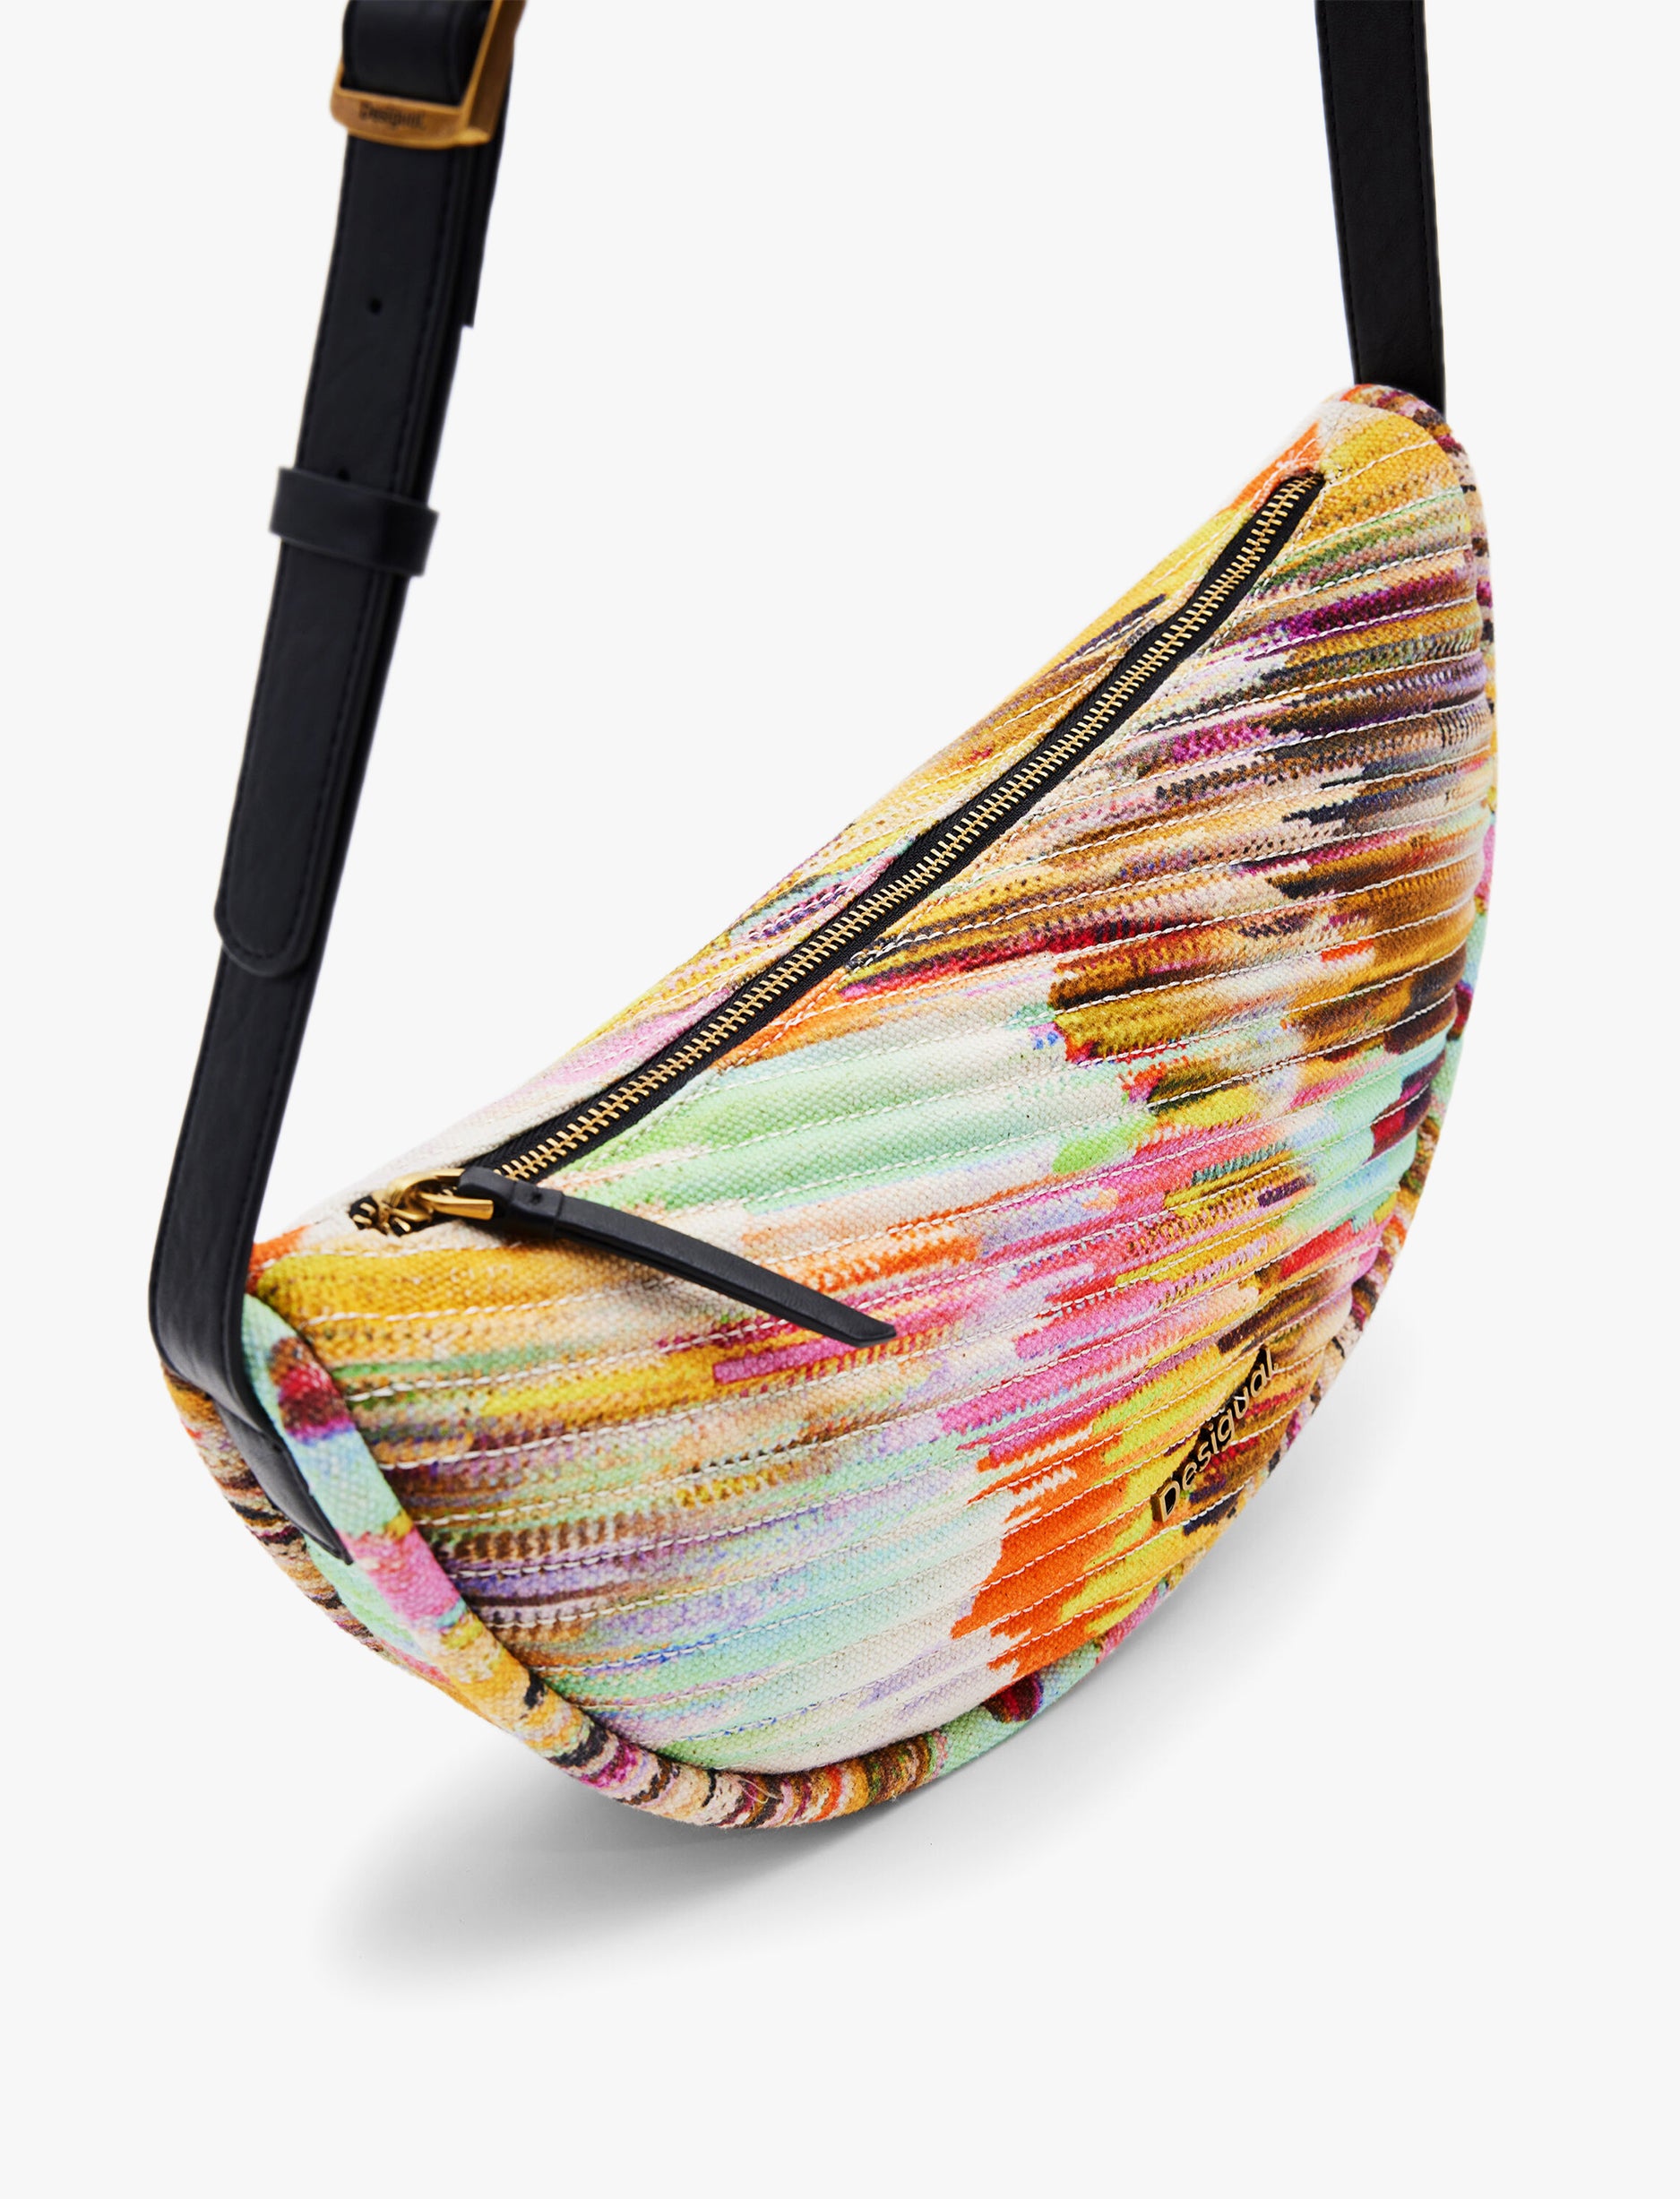 Desigual Bag Endocada Sheffeild - תיק כתף אובלי בצבע תותי פרוטי